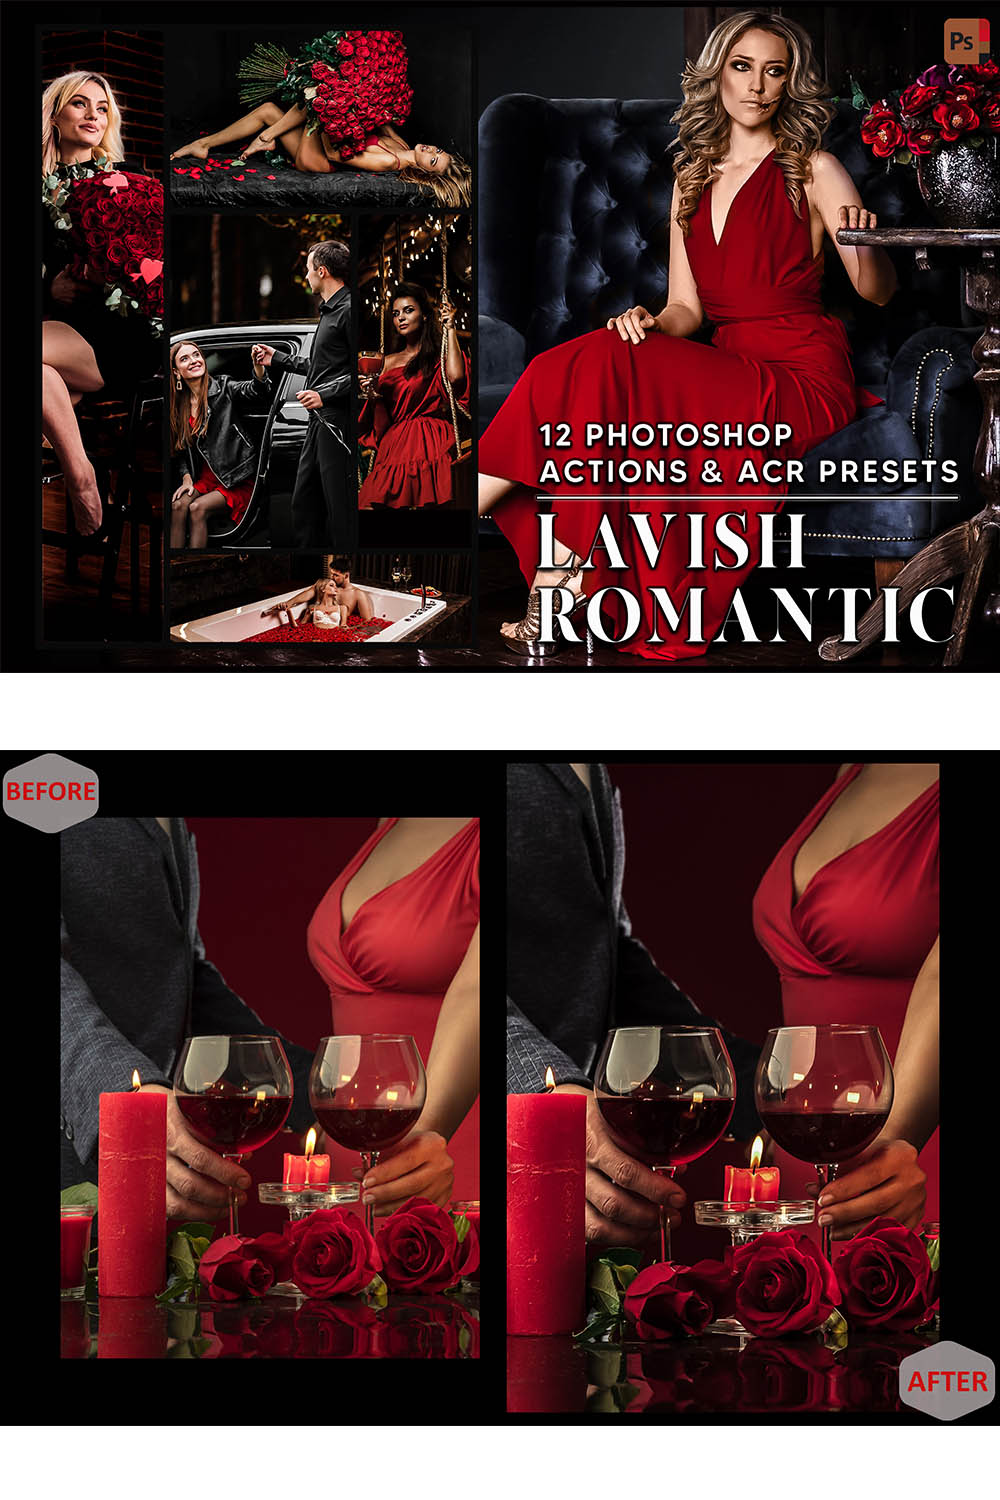 12 Photoshop Actions, Lavish Romantic Ps Action, Valentine ACR Preset, Luxury Couple Ps Filter, Atn Portrait And Lifestyle Theme For Instagram, Blogger pinterest preview image.